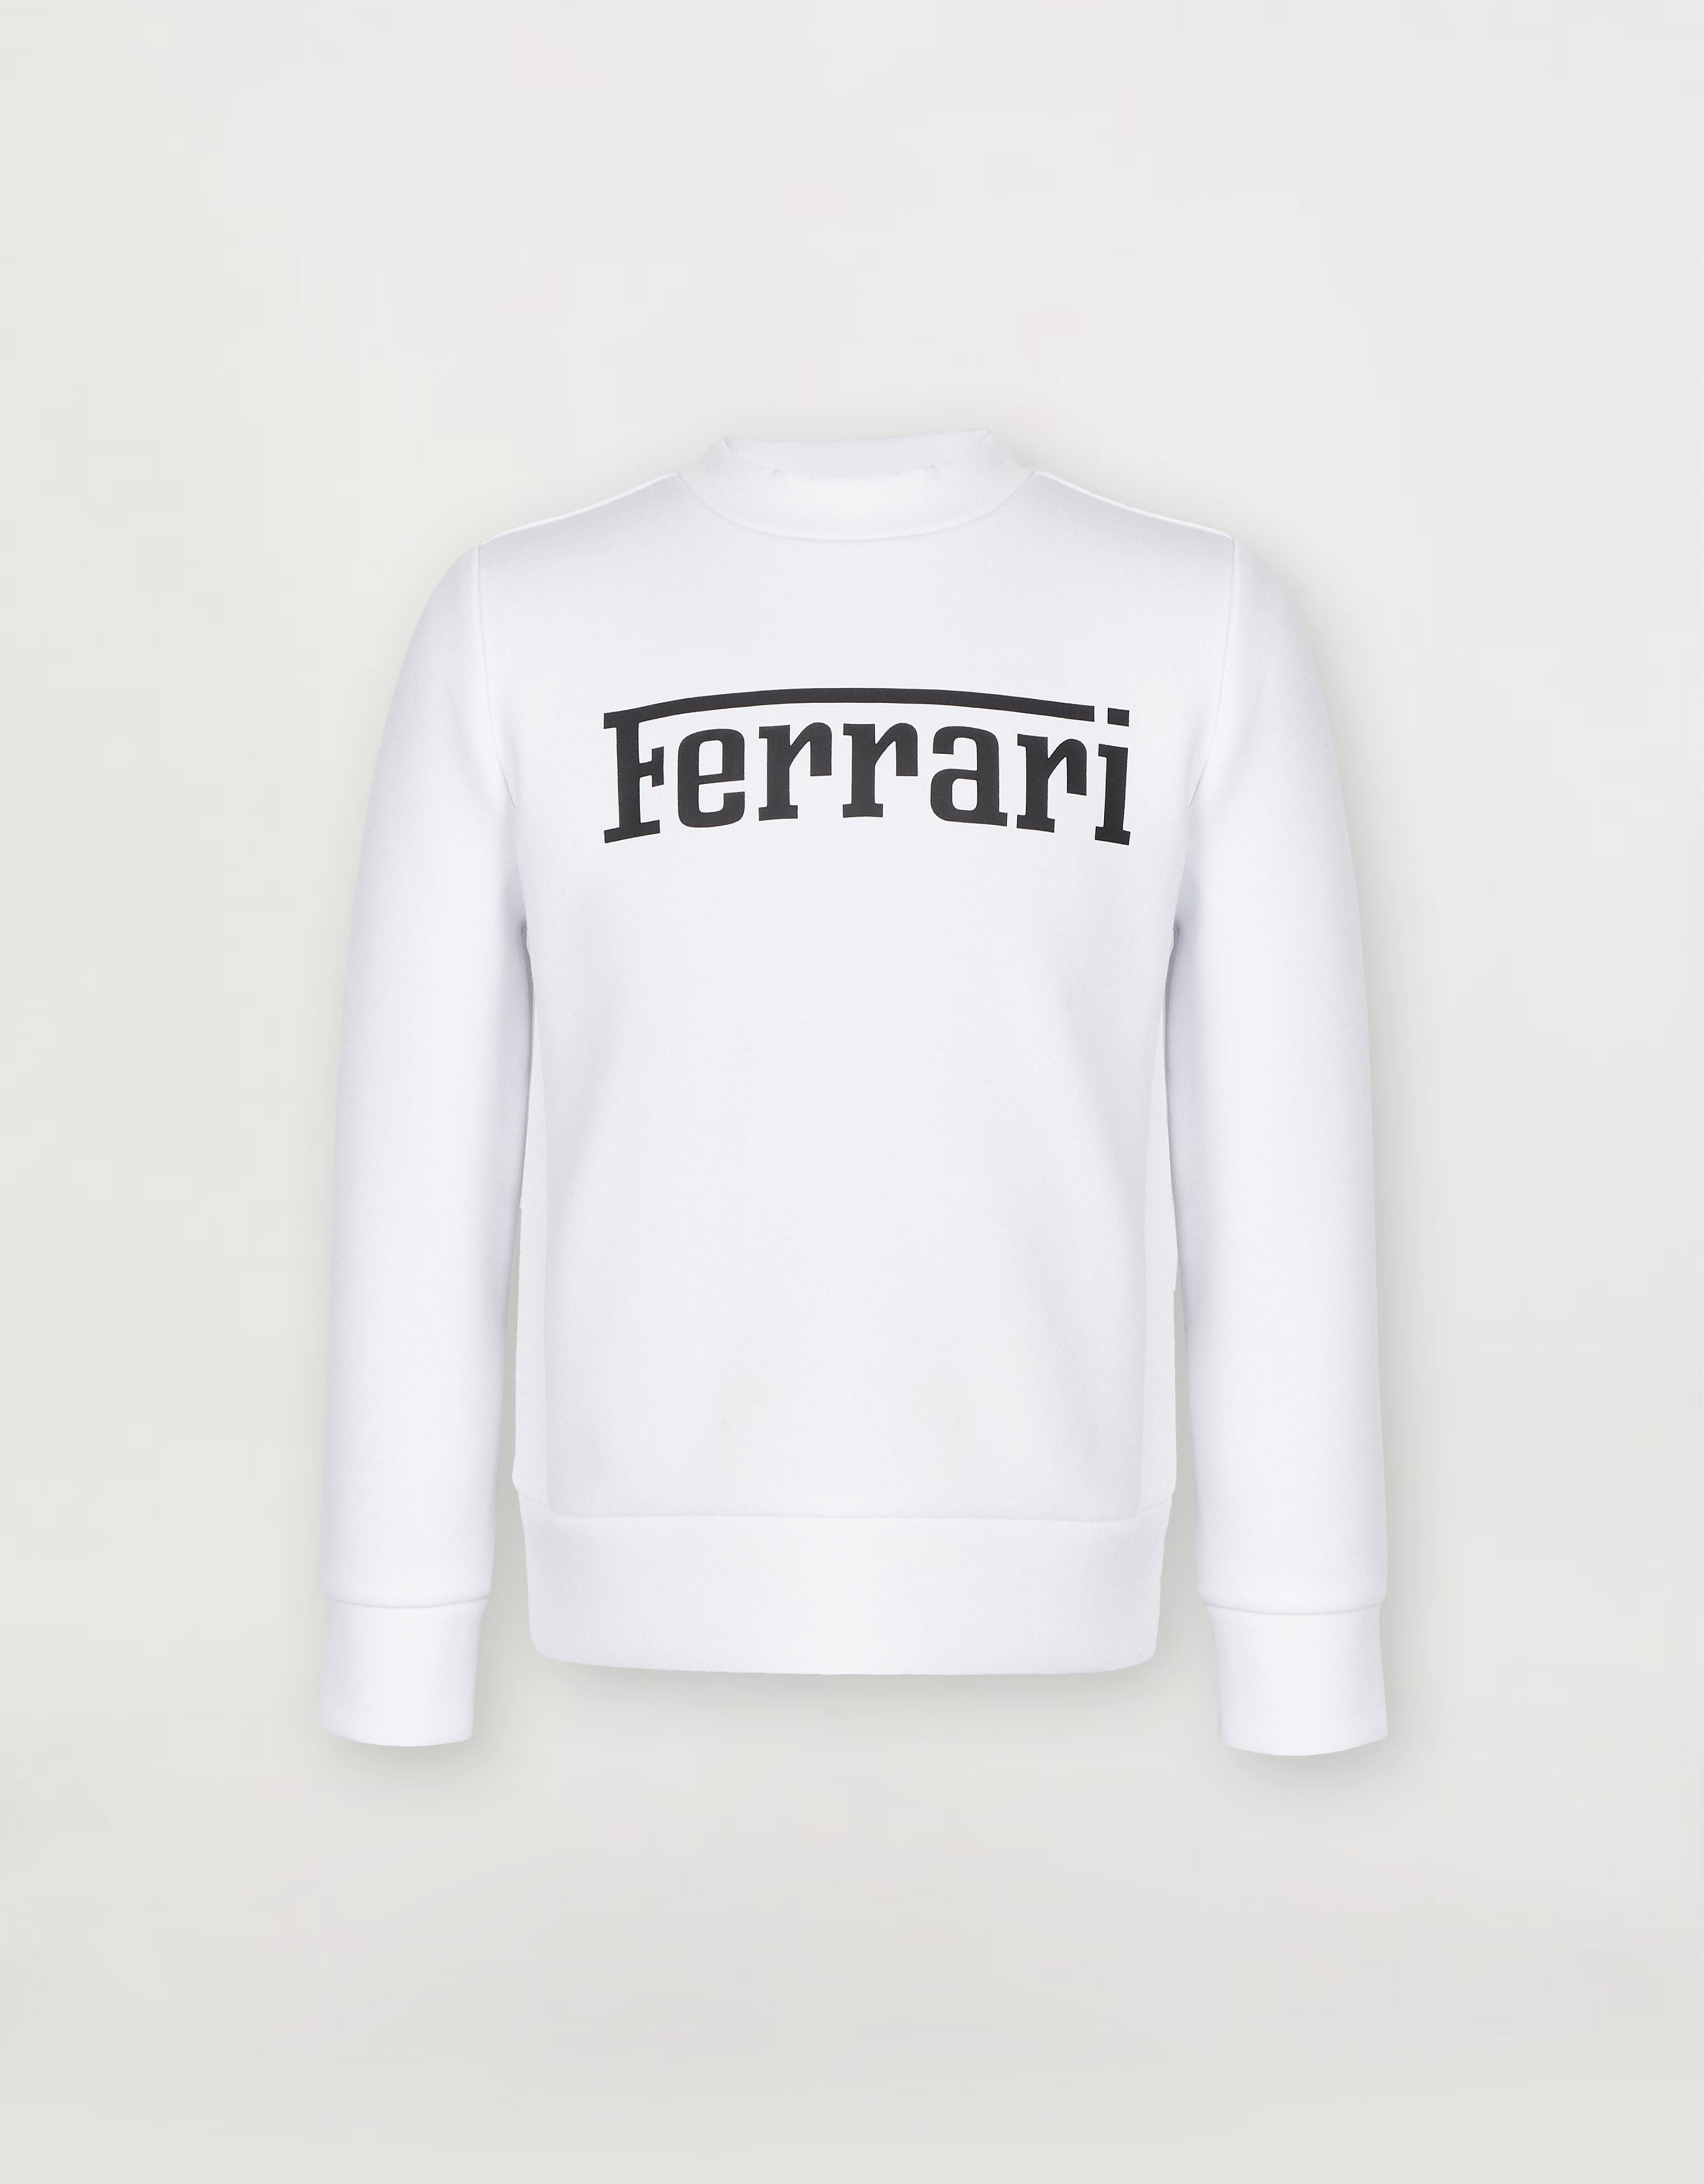 Ferrari Children’s sweatshirt in recycled scuba fabric with large Ferrari logo Rosso Corsa 20162fK